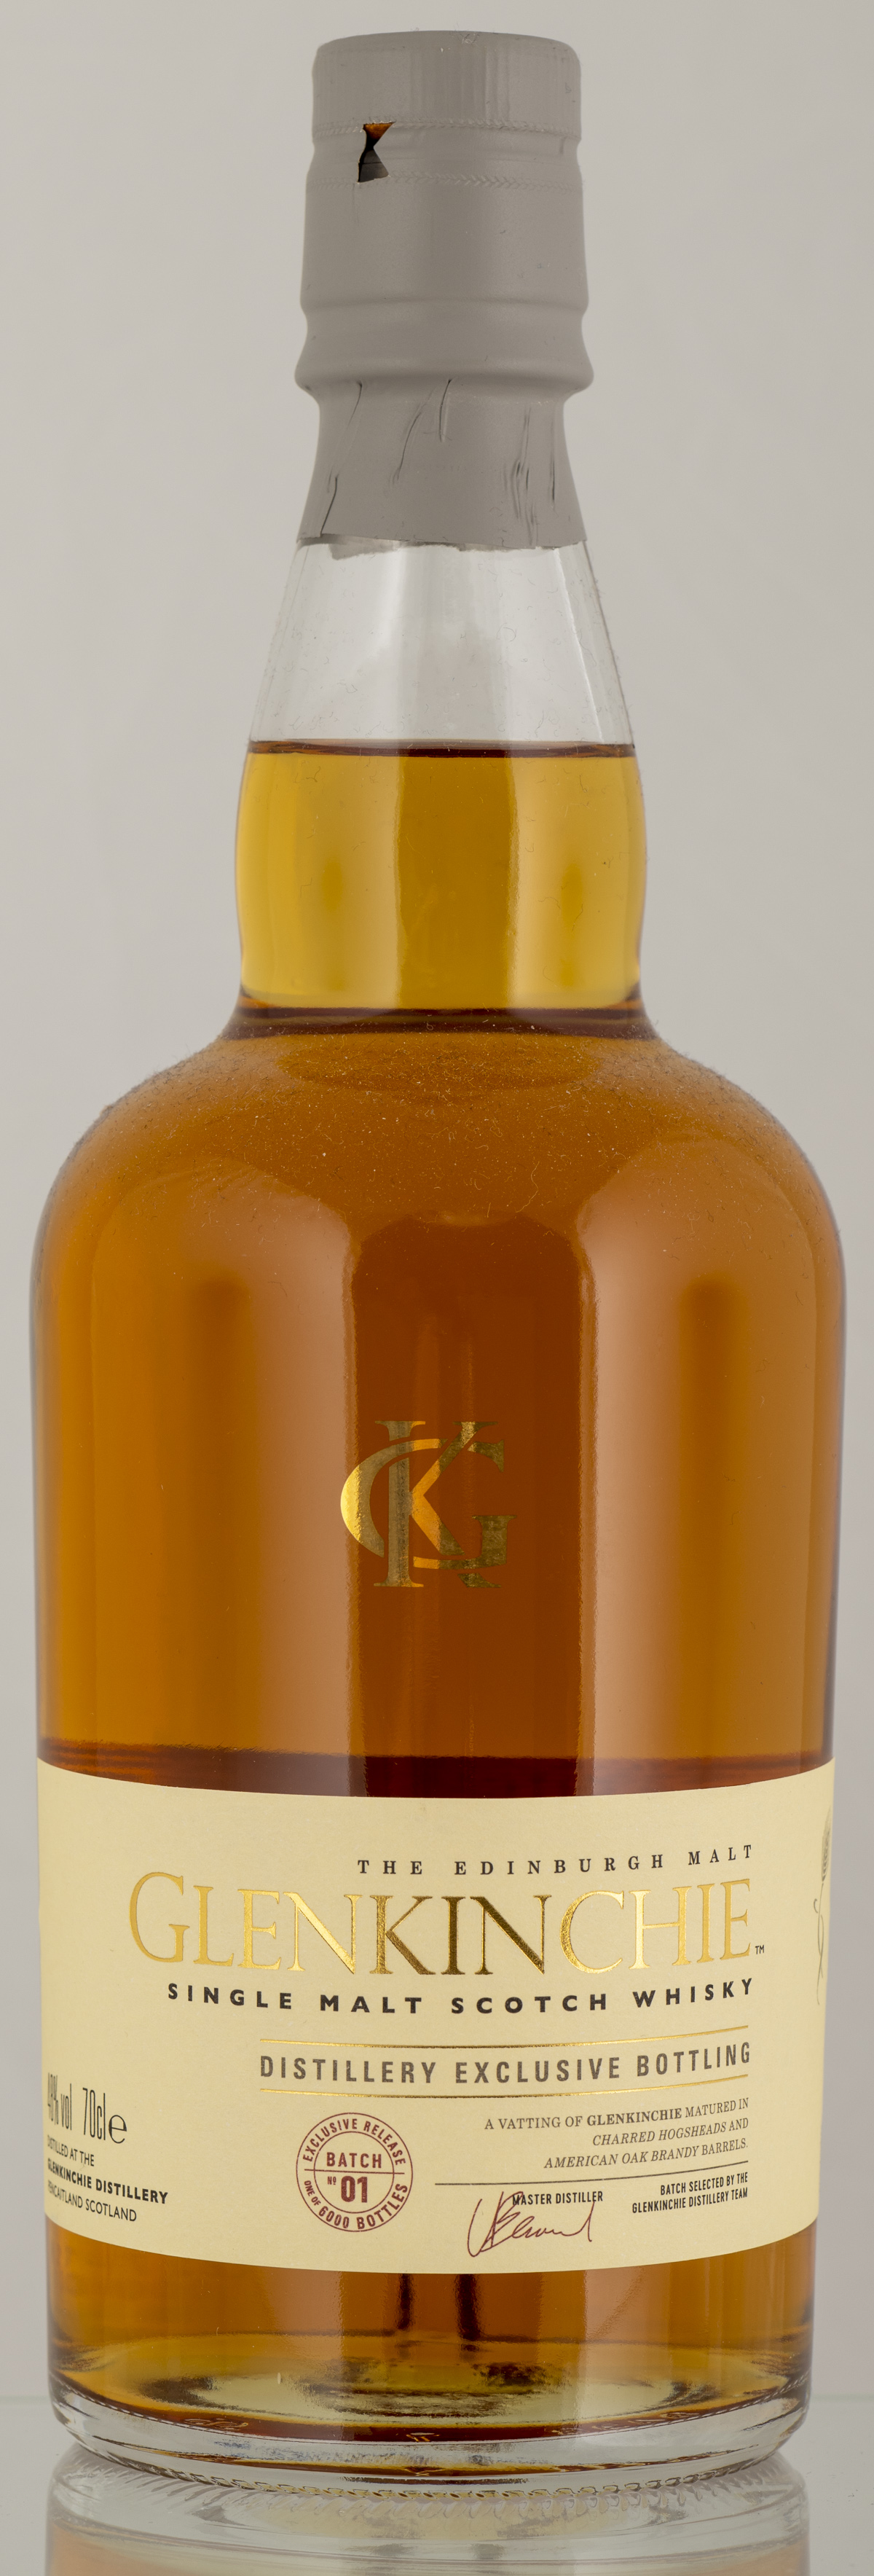 Billede: PHC_2613 - Glenkinchie Distillery Exclusice Bottling Batch 01 - bottle front.jpg